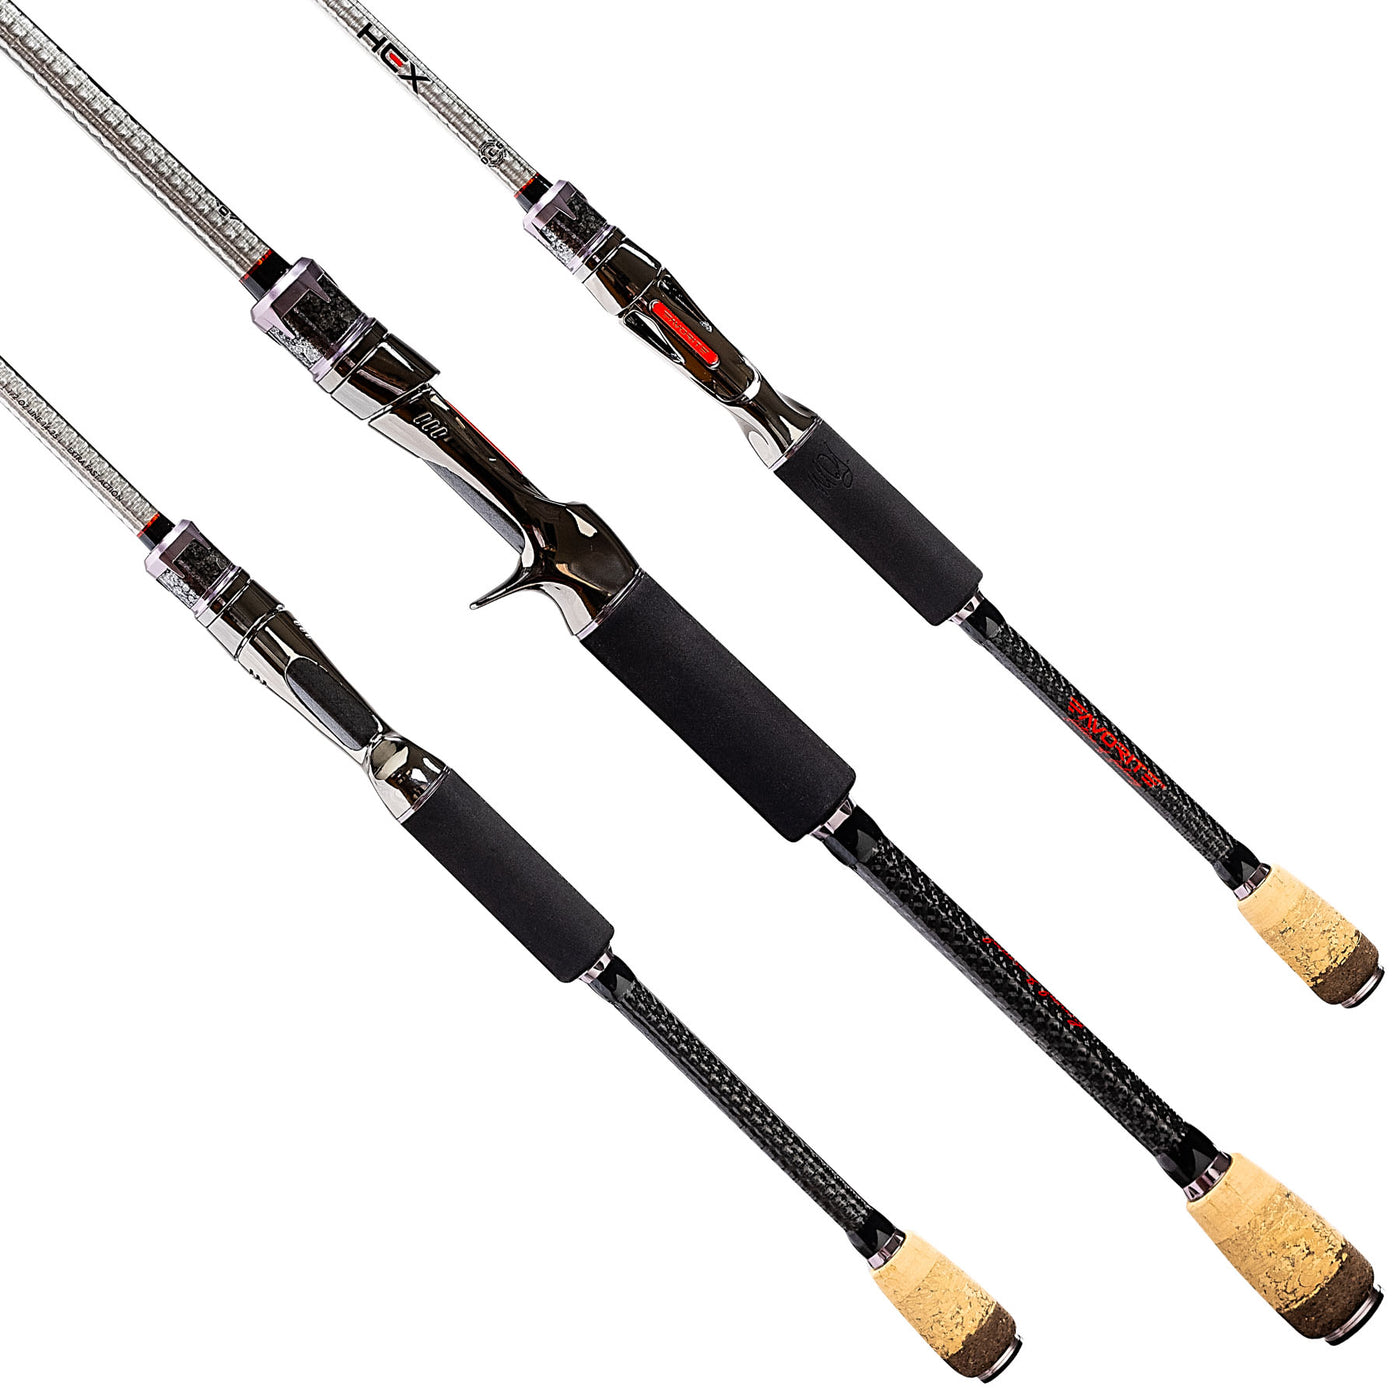 Signature Series: MDJ Hex Casting Rod Favorite Fishing